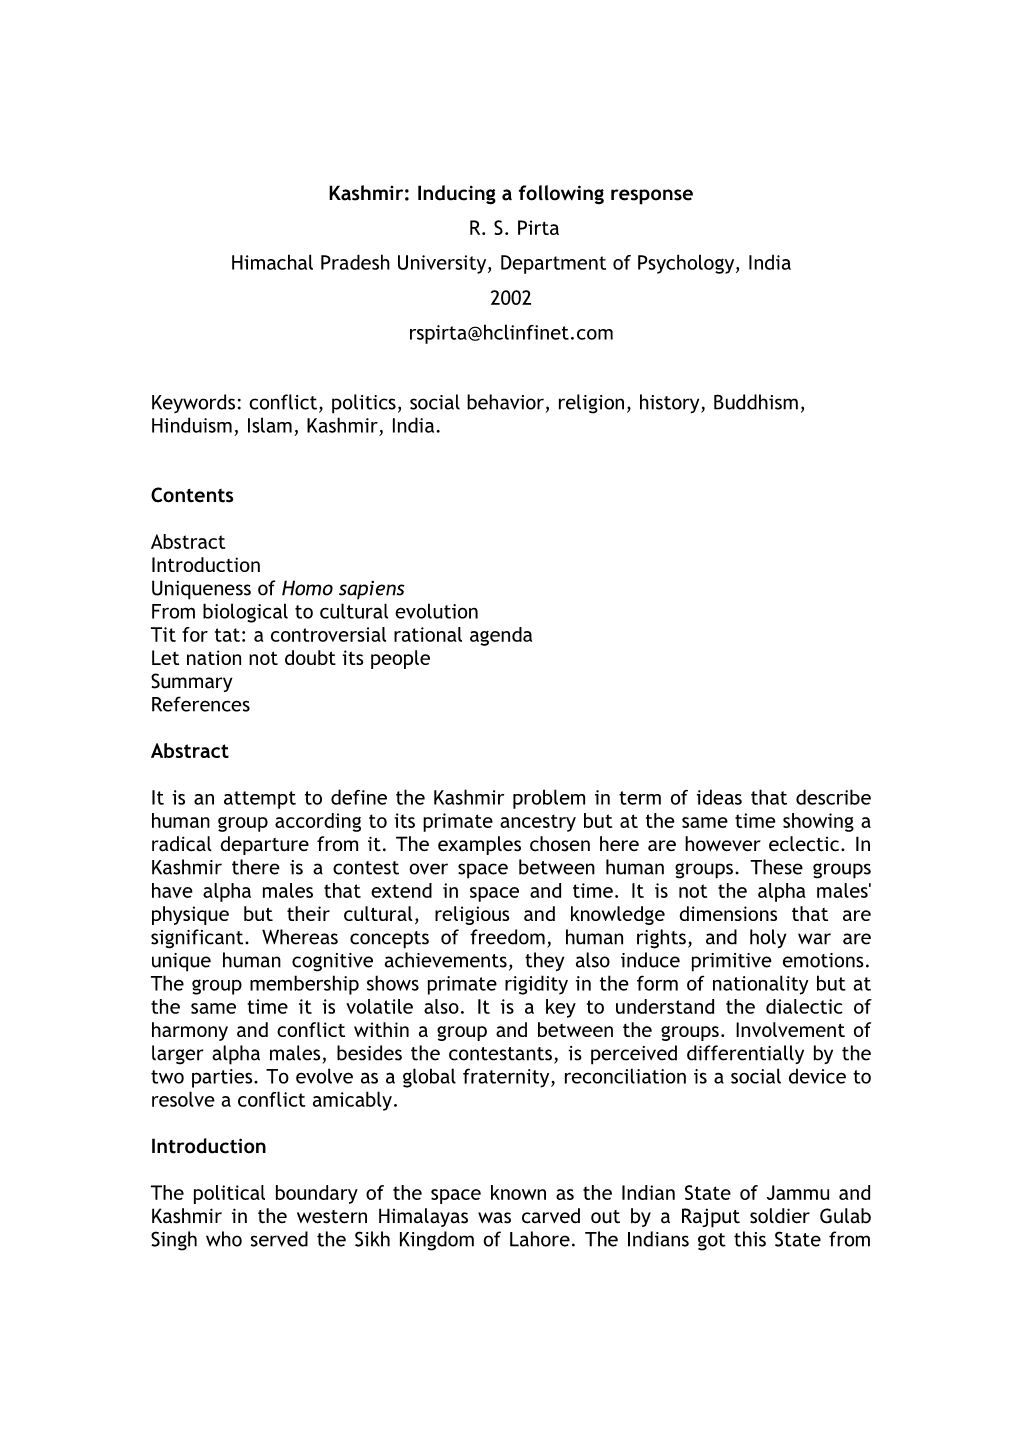 Kashmir: Inducing a Following Response R. S. Pirta Himachal Pradesh University, Department of Psychology, India 2002 Rspirta@Hclinfinet.Com